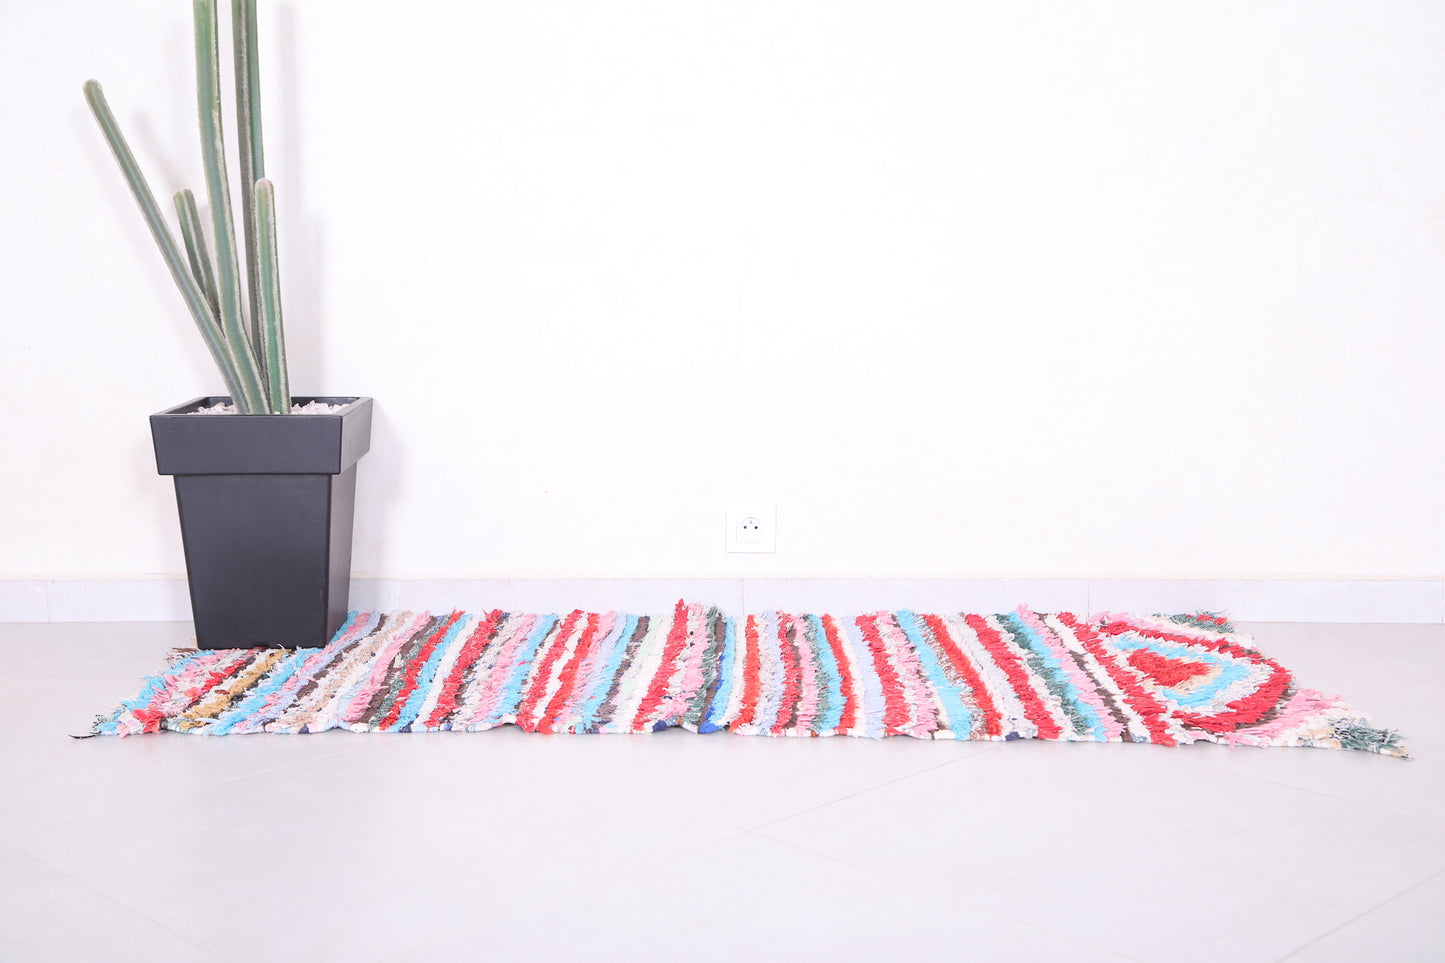 Striped Moroccan Runner Rug Shag 2.2 X 5.6 Feet